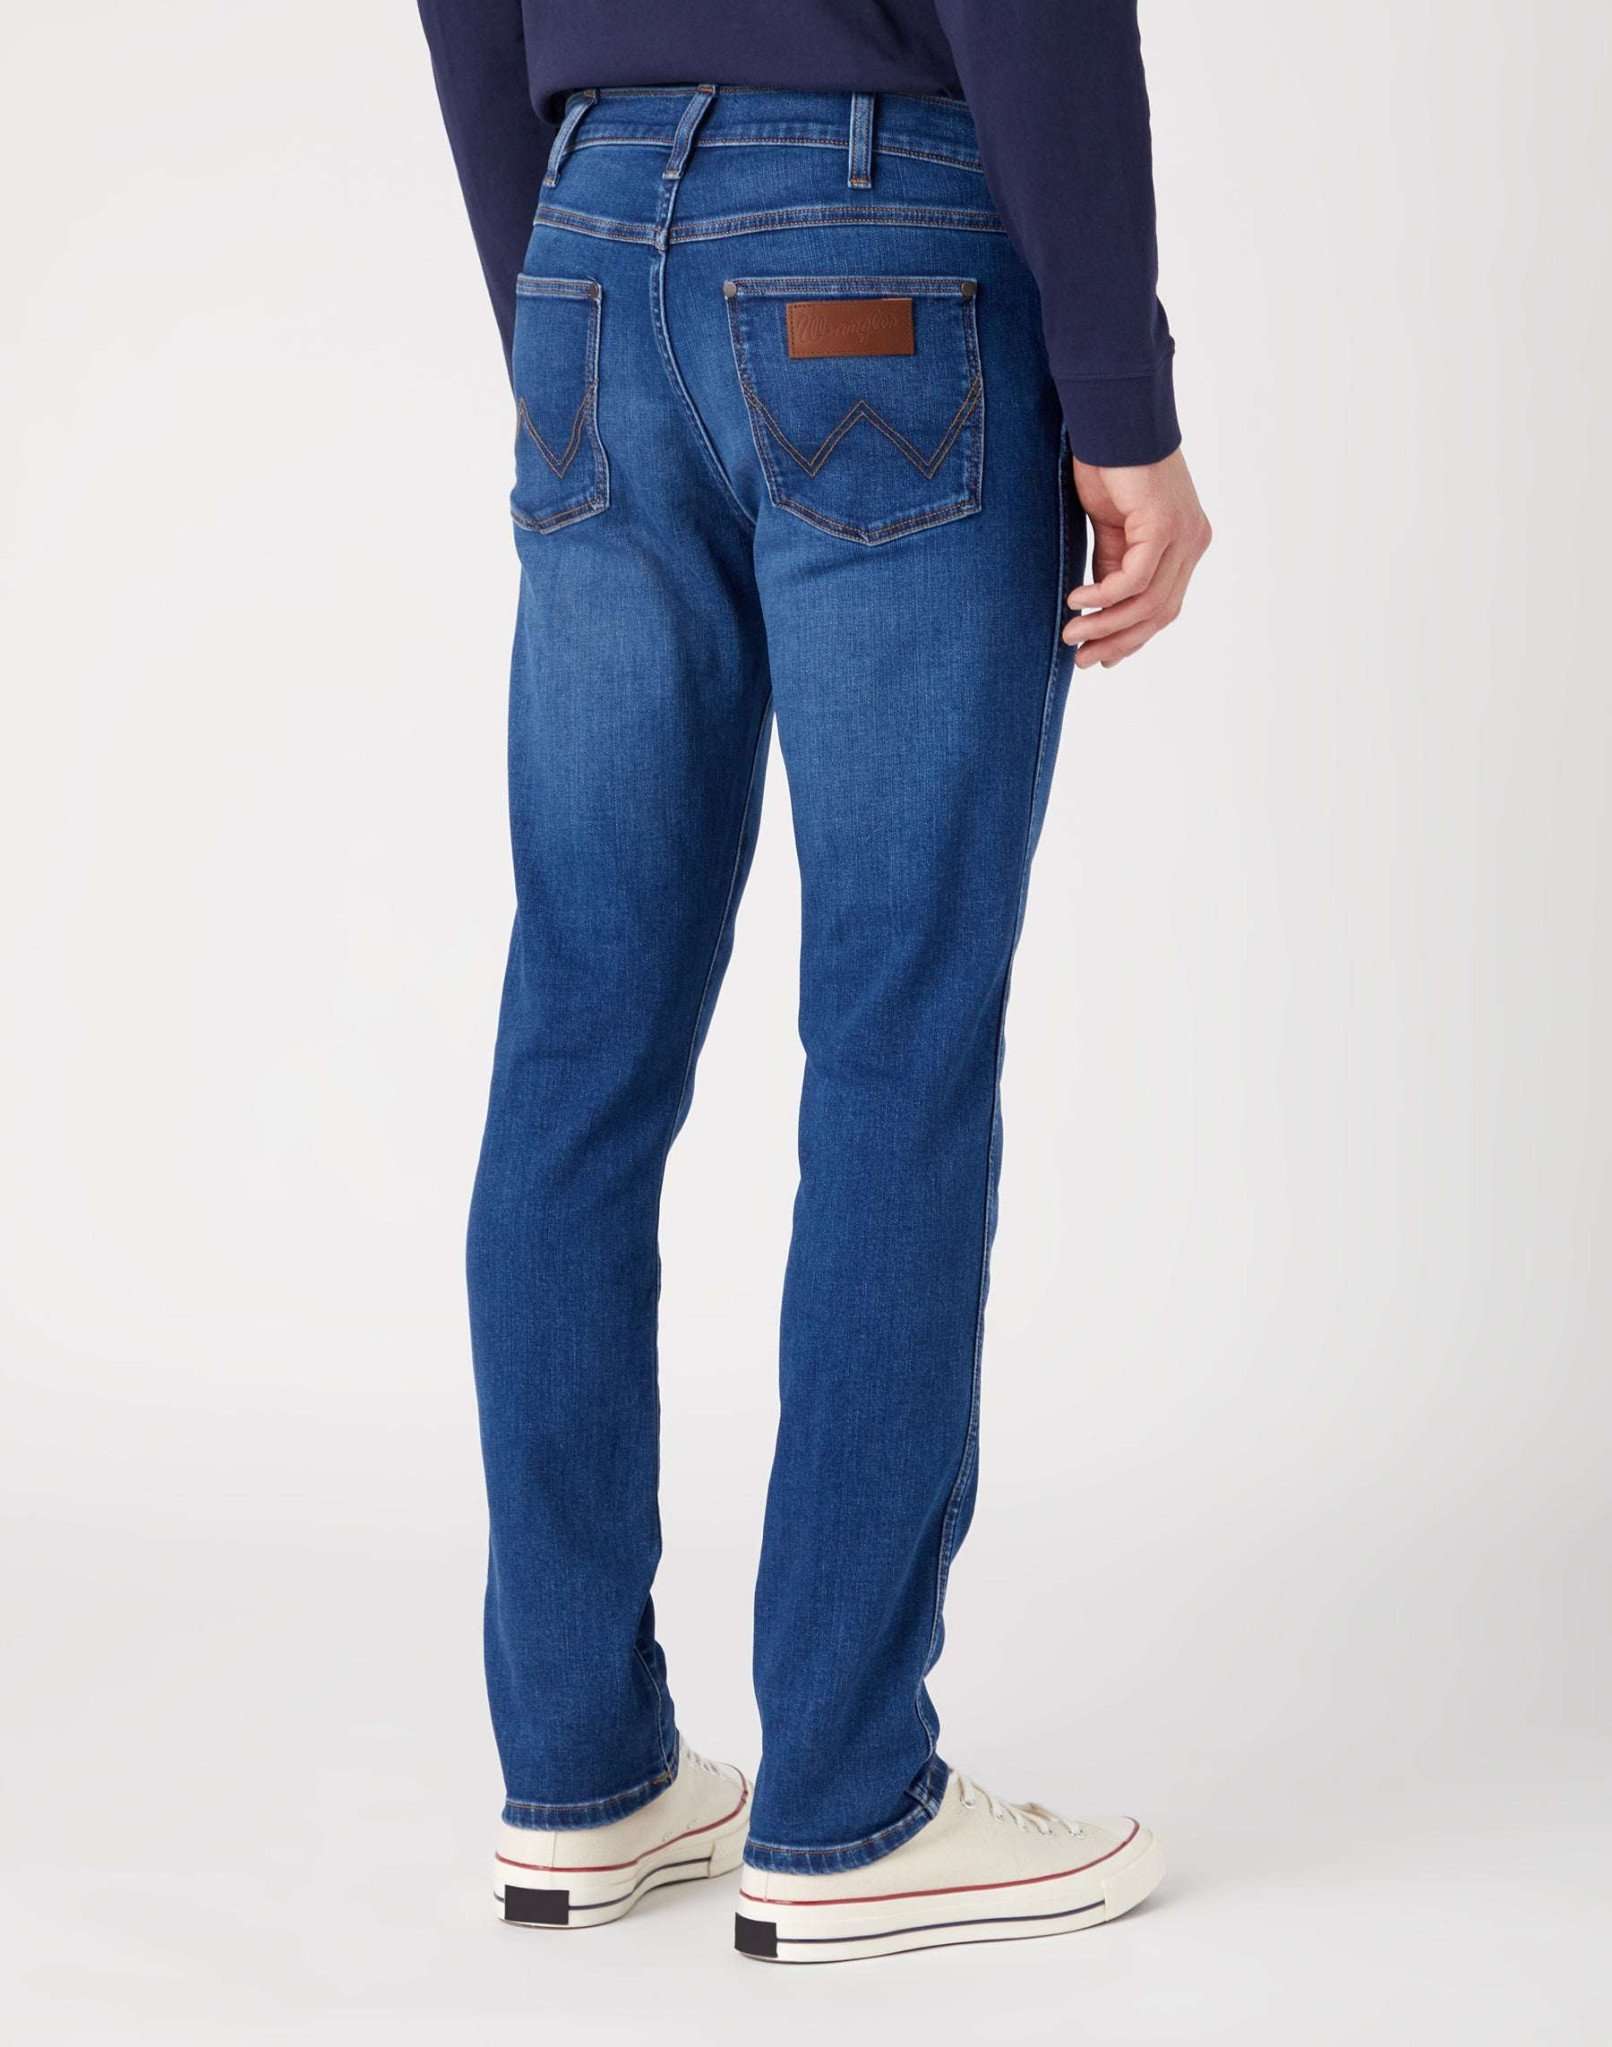 Larston in Orion Jeans Wrangler   